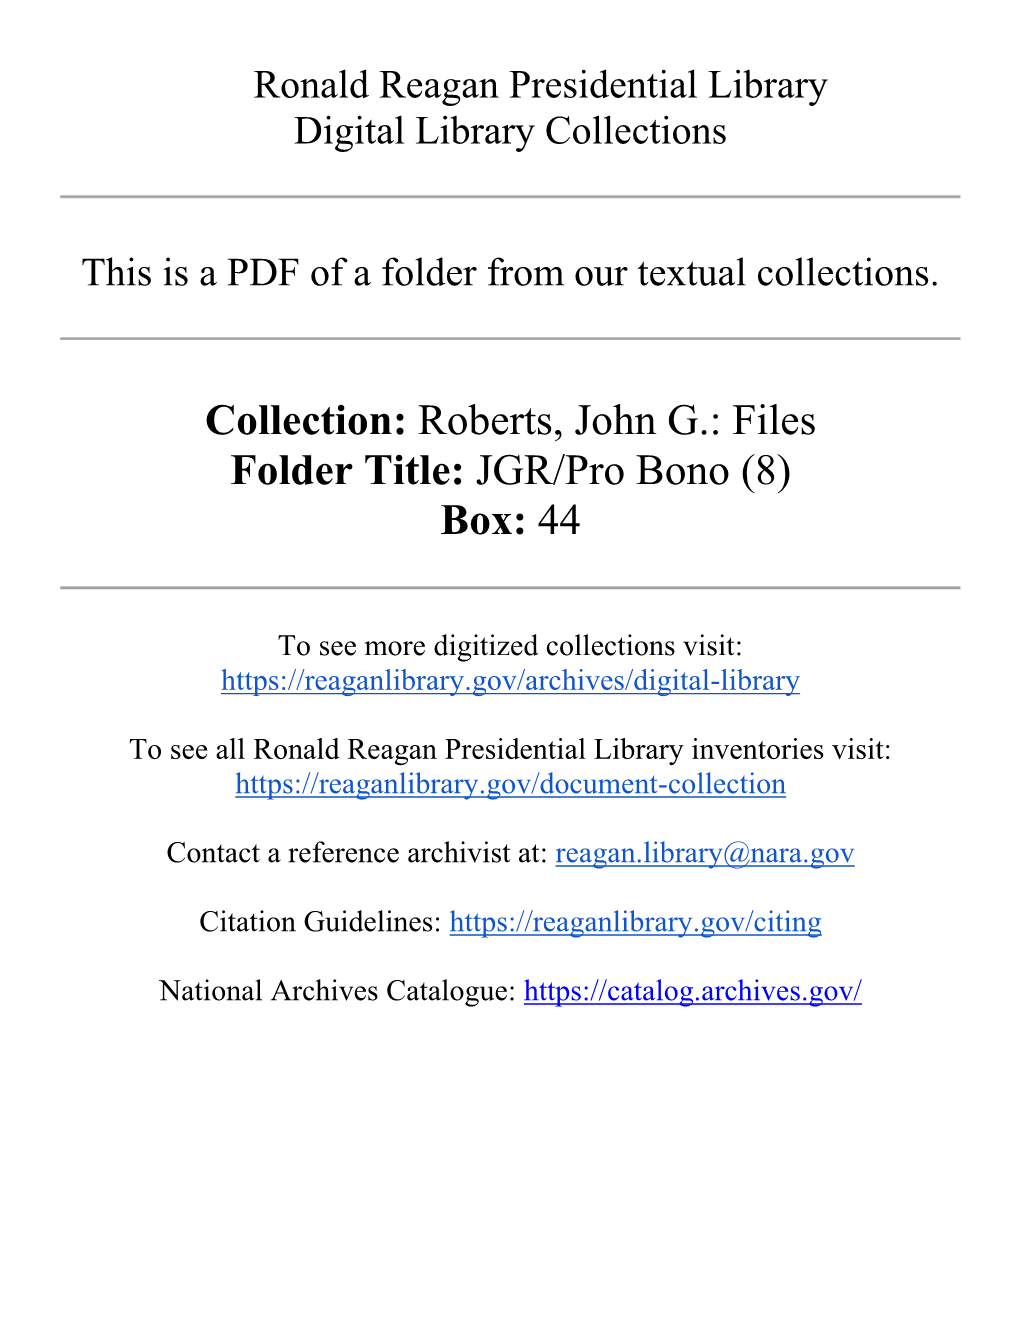 Collection: Roberts, John G.: Files Folder Title: JGR/Pro Bono (8) Box: 44